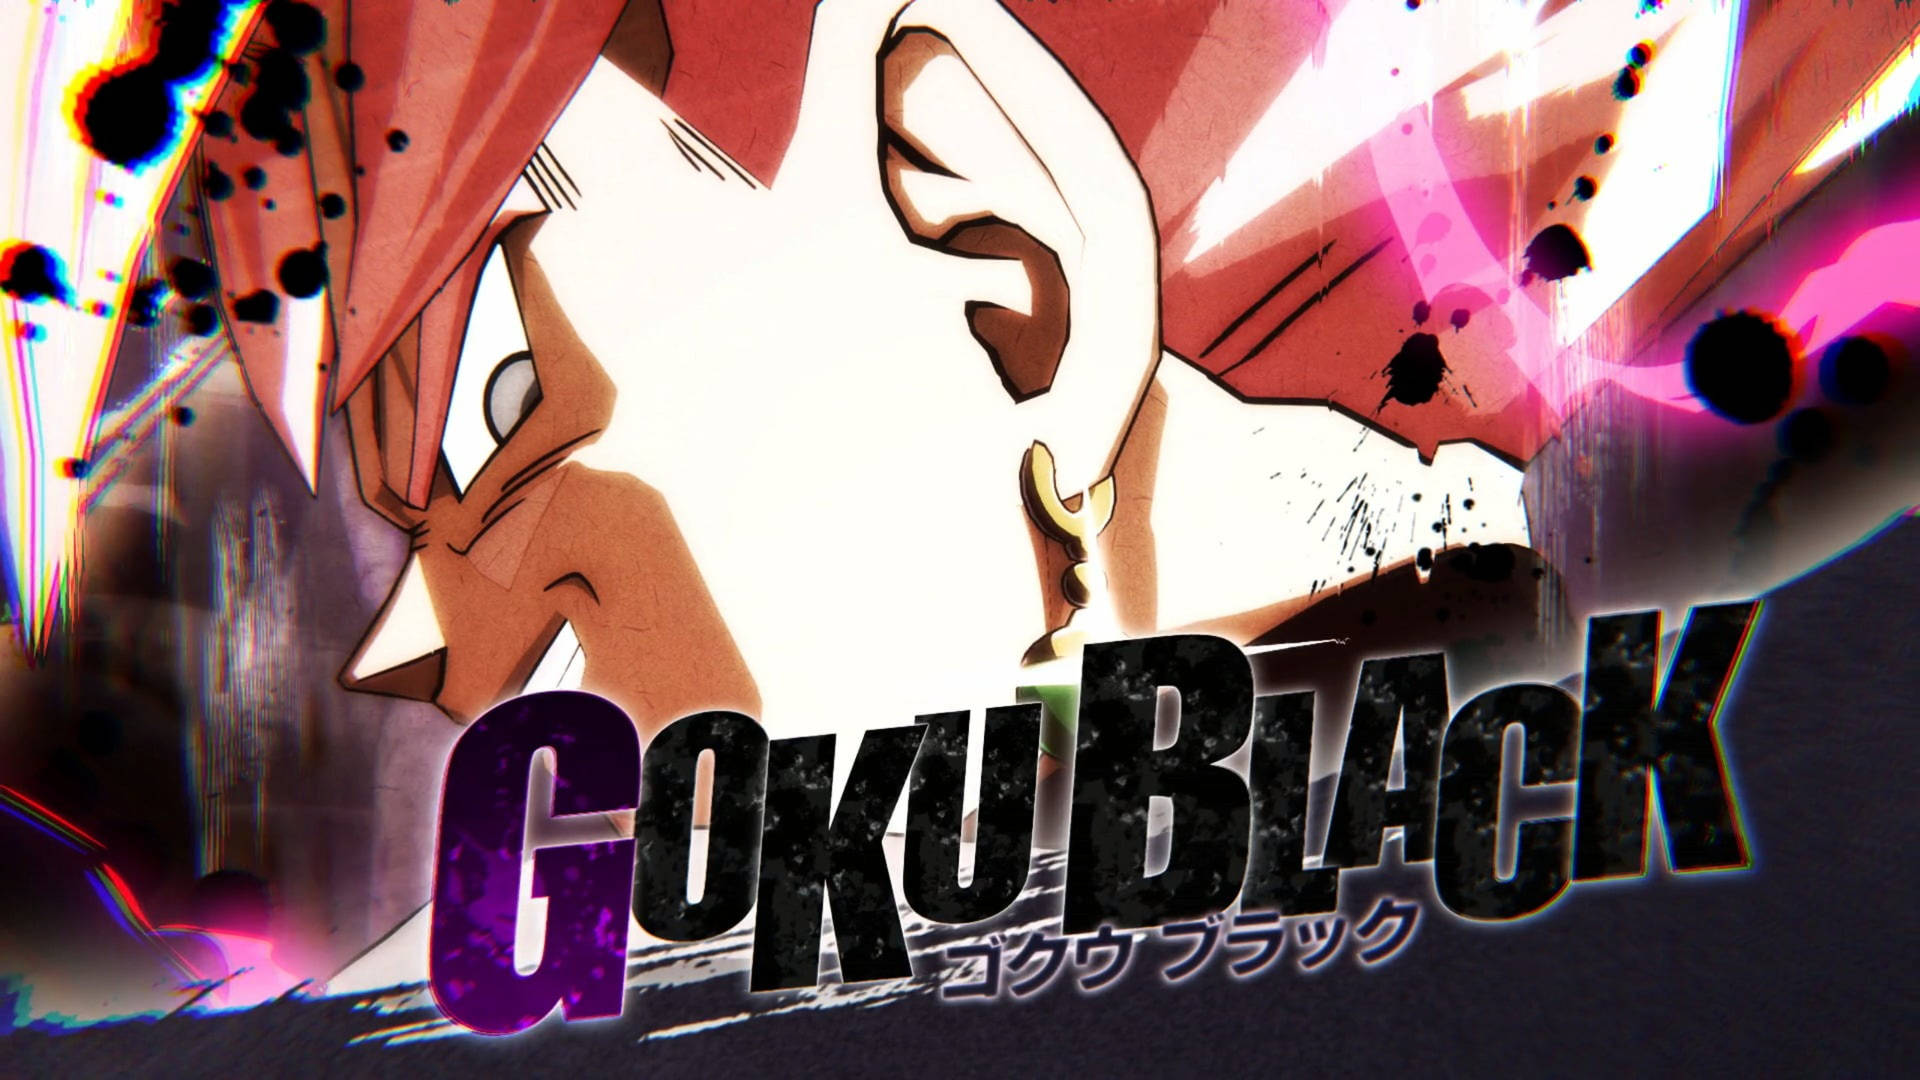 Goku Black 2560X1440 Wallpaper and Background Image